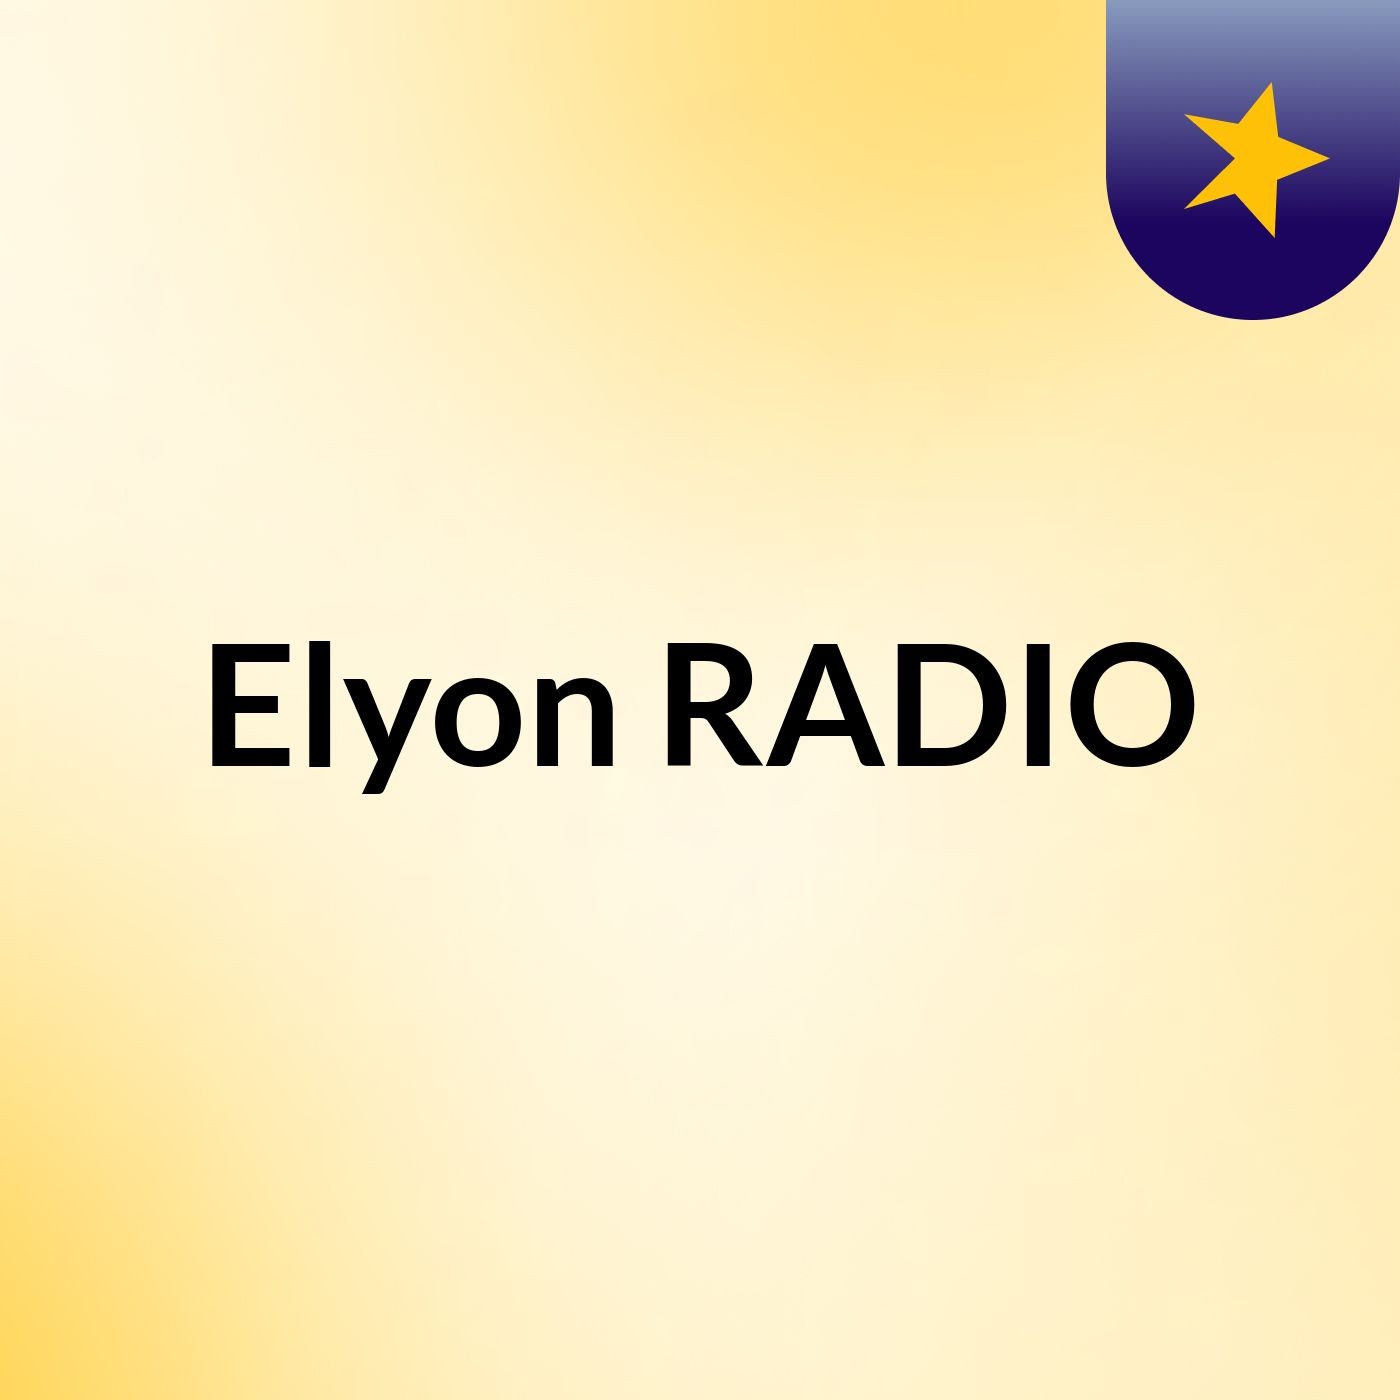 Elyon RADIO